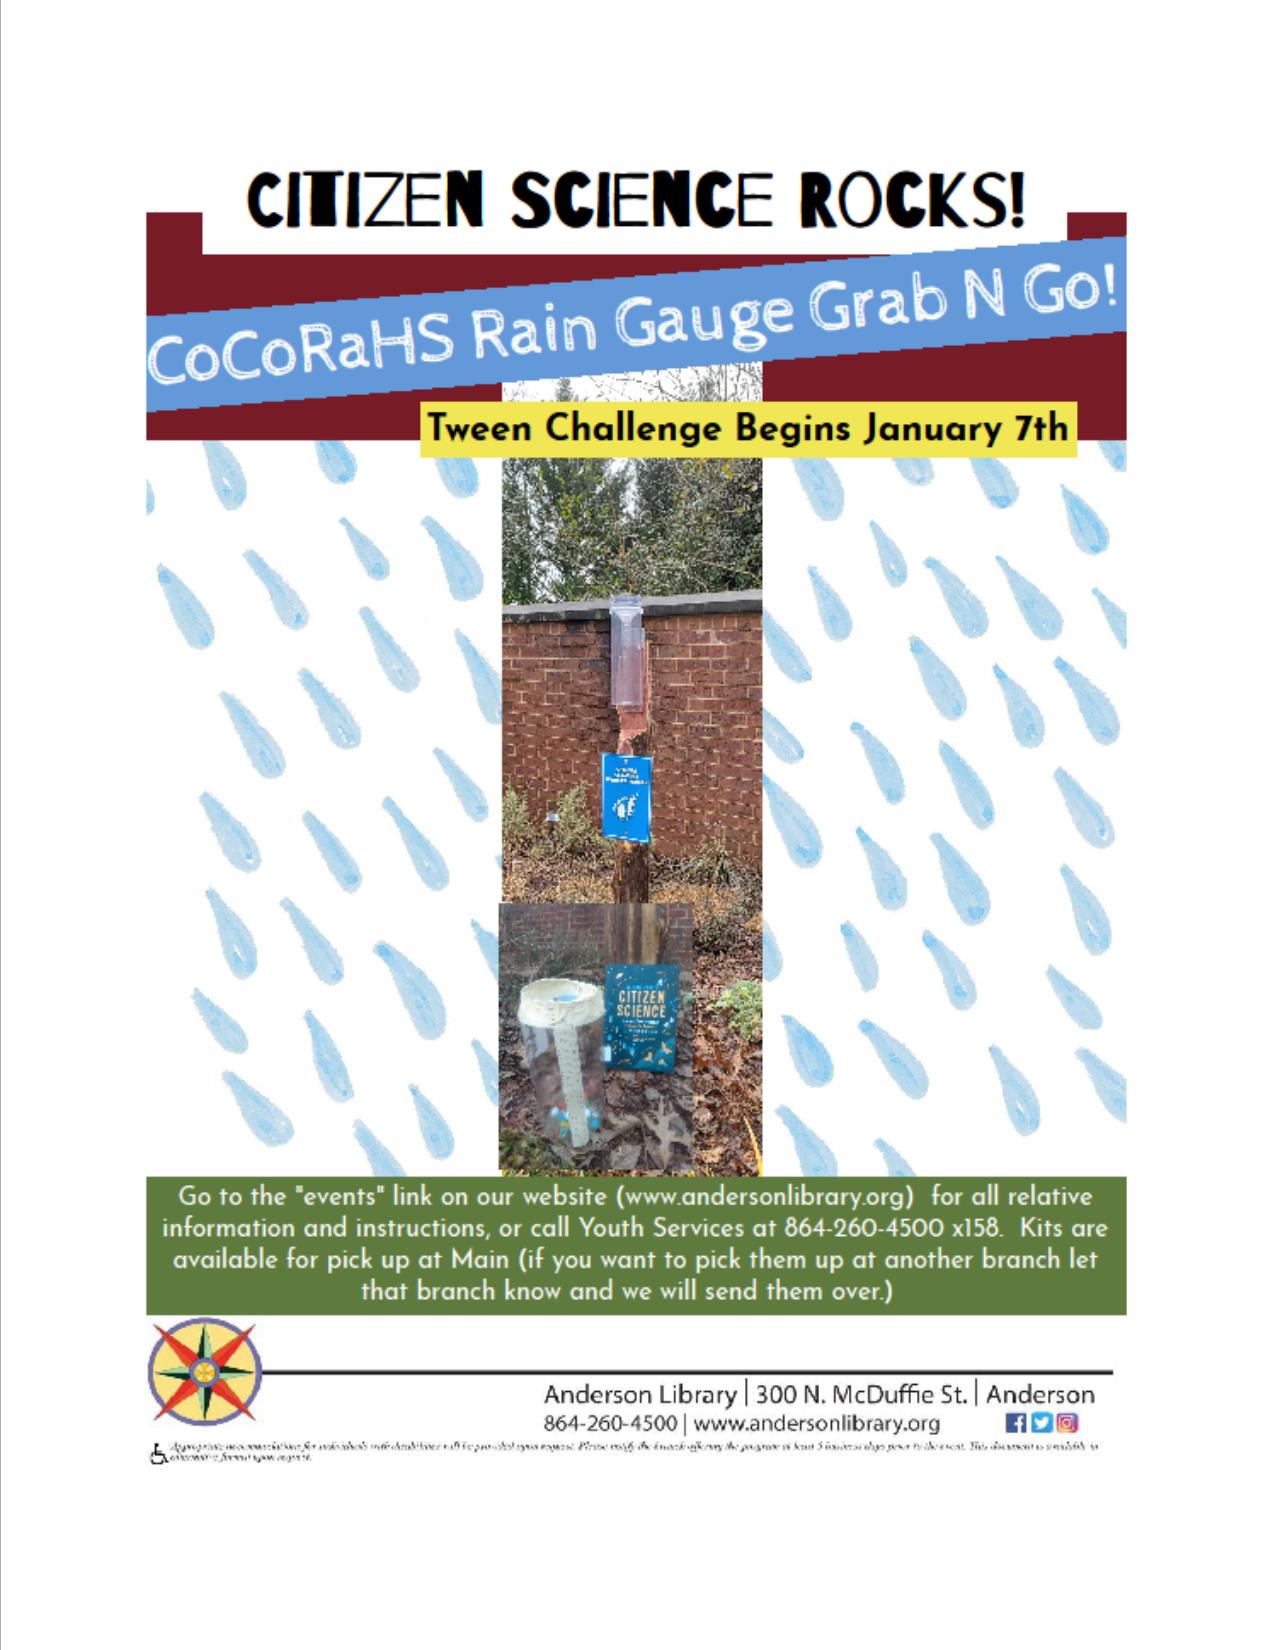 Citizen Science: Rain Gauge Grab N Go!